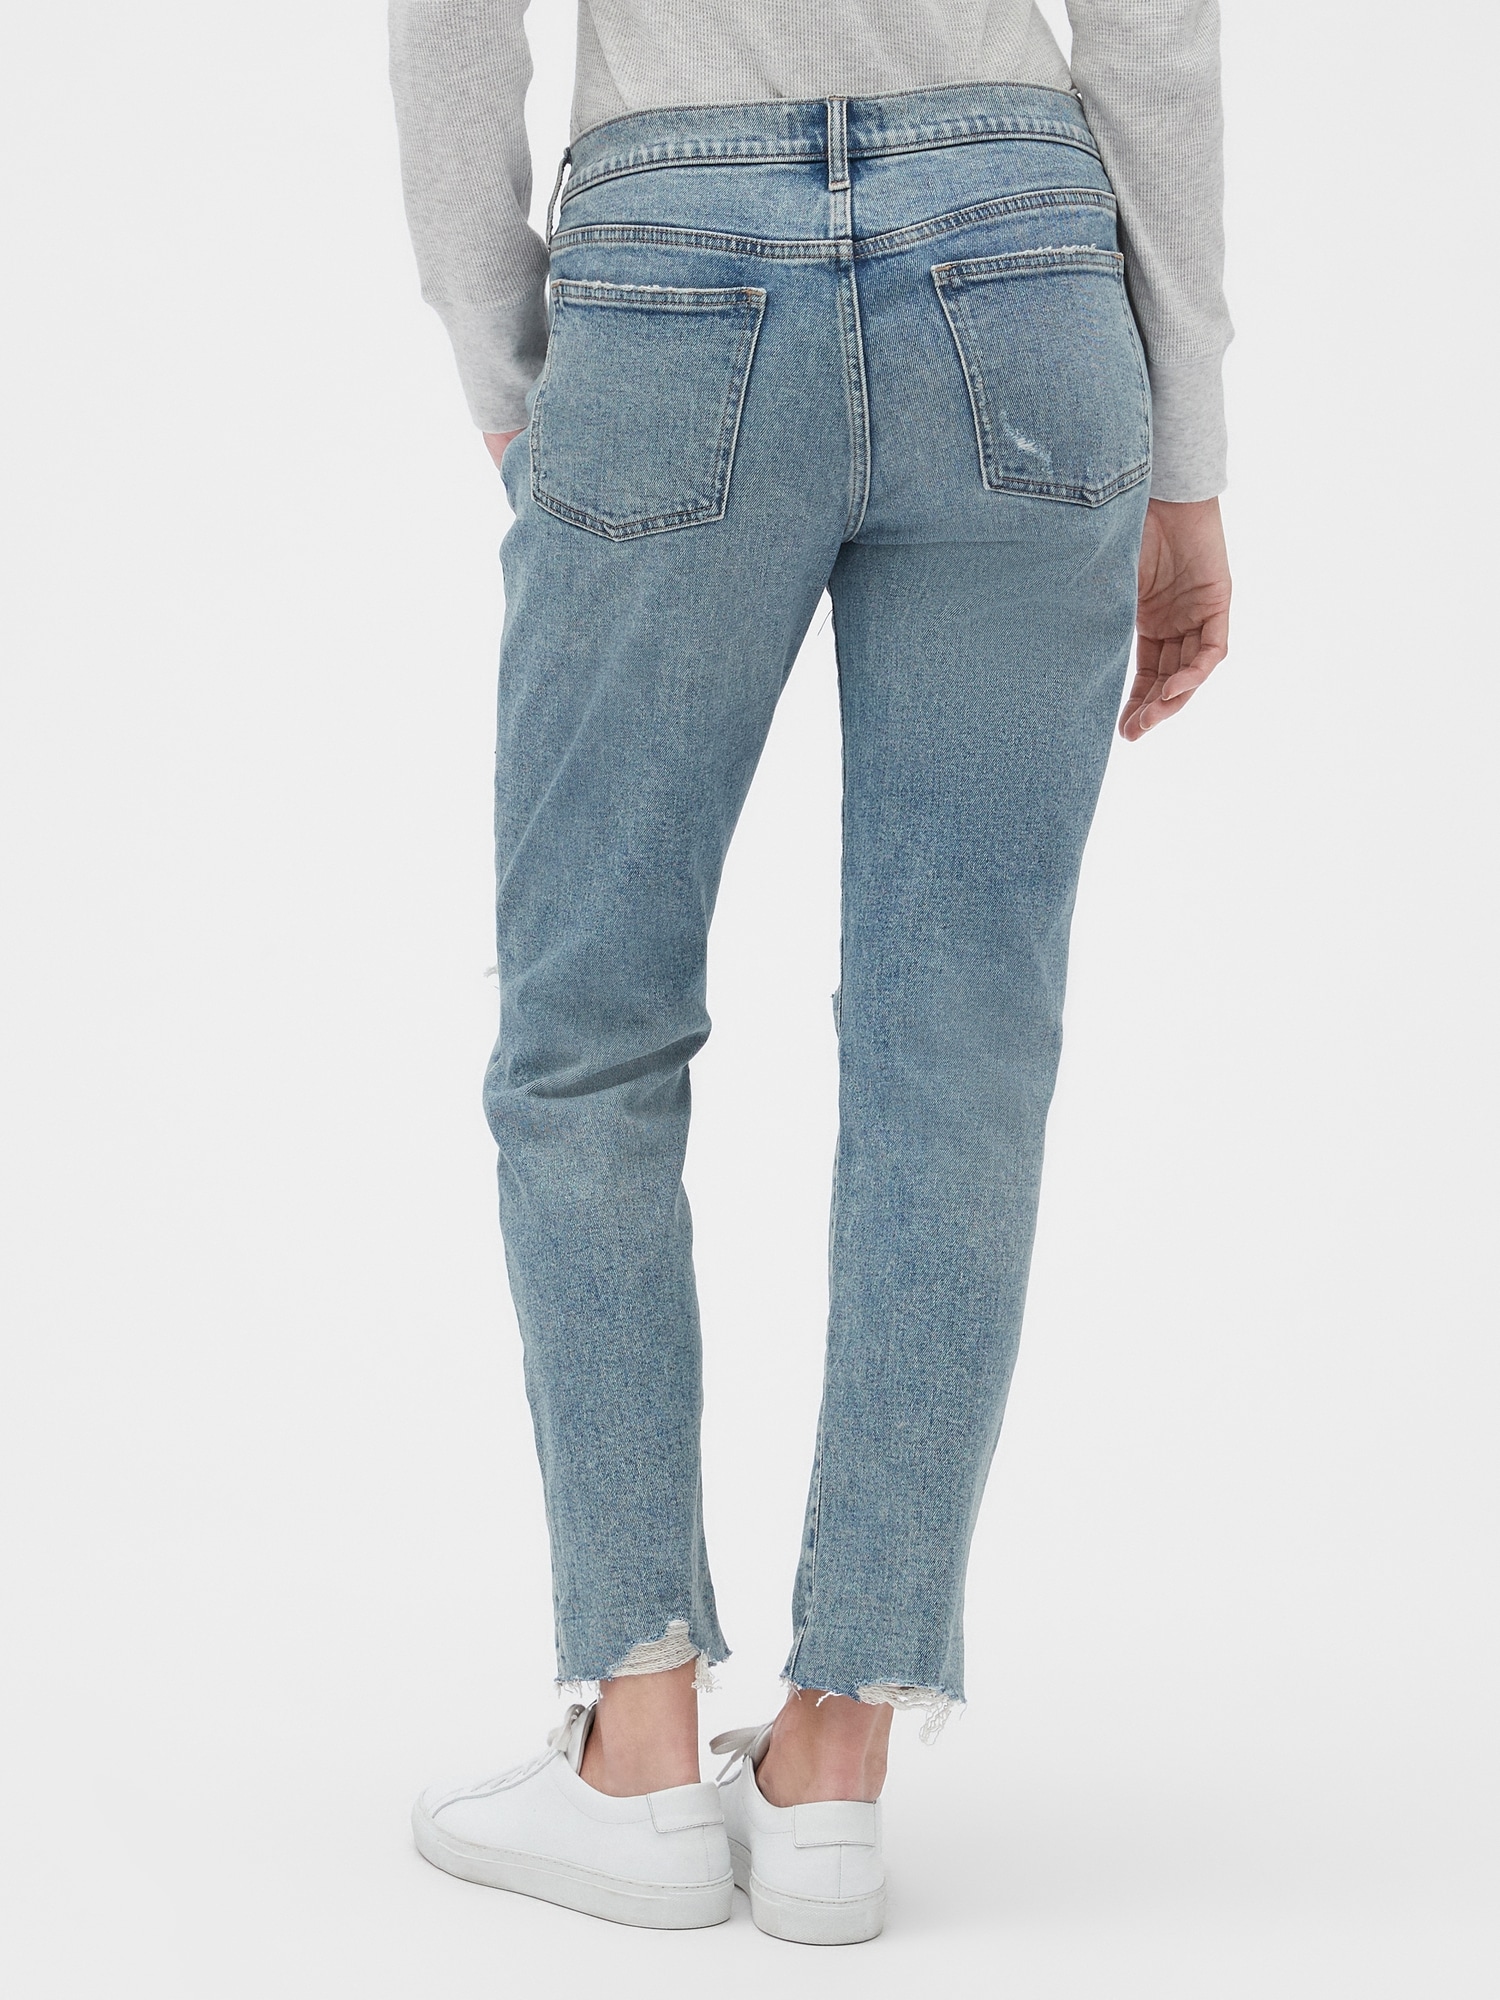 gap petite girlfriend jeans